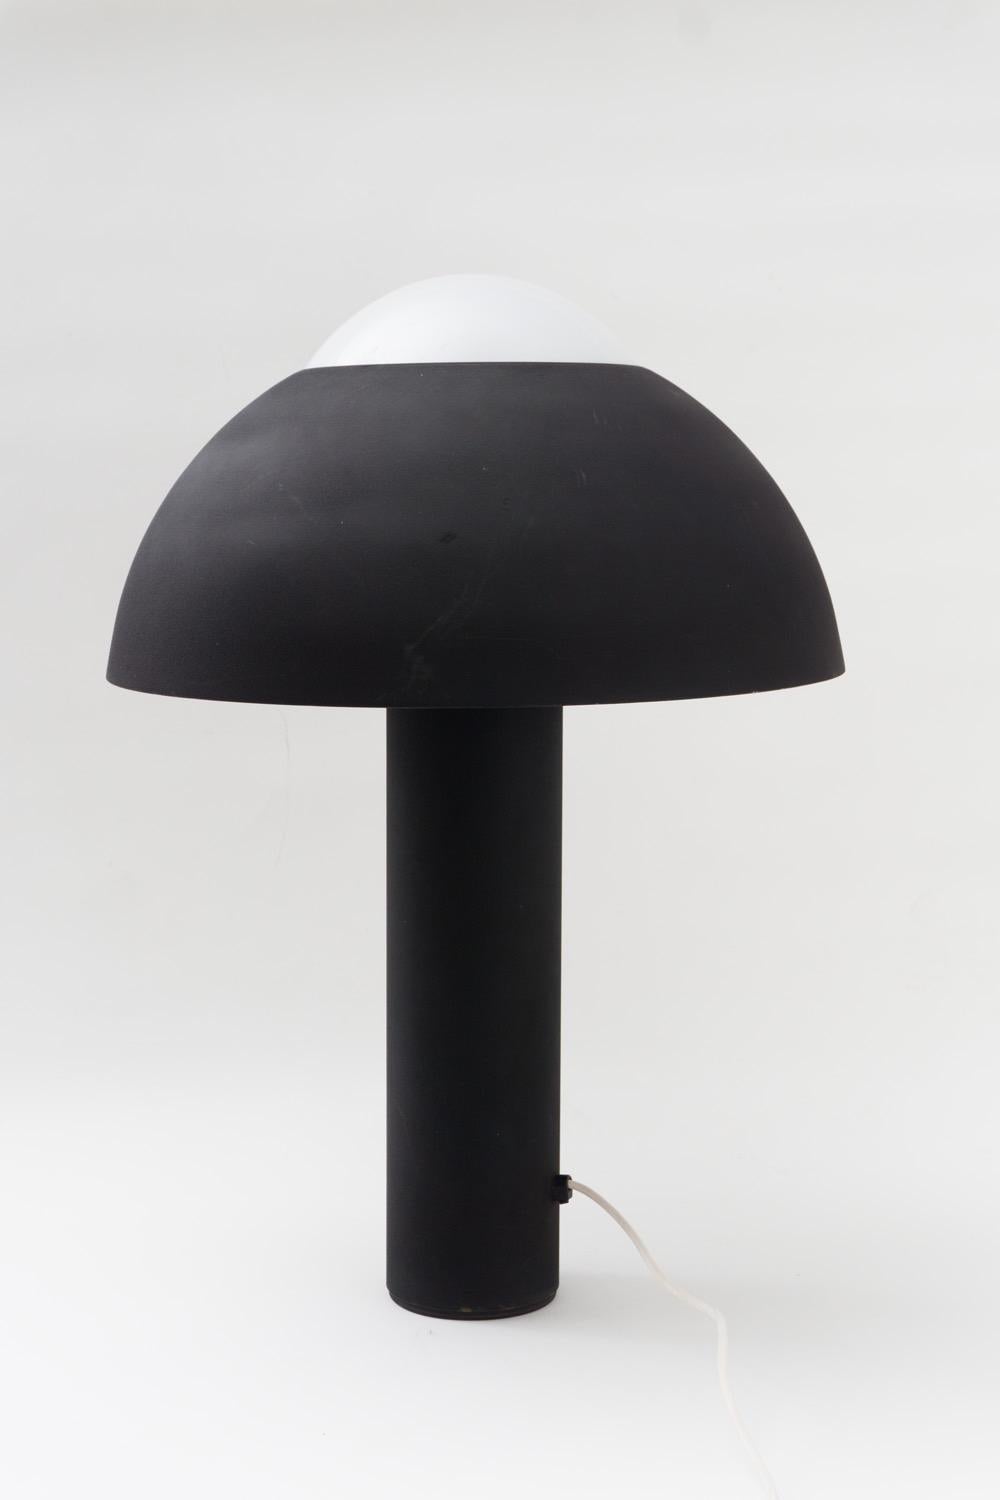 Italian Rare Table Lamp 'Nervina', Black Metal, by Sergio Asti, 1962 For Sale